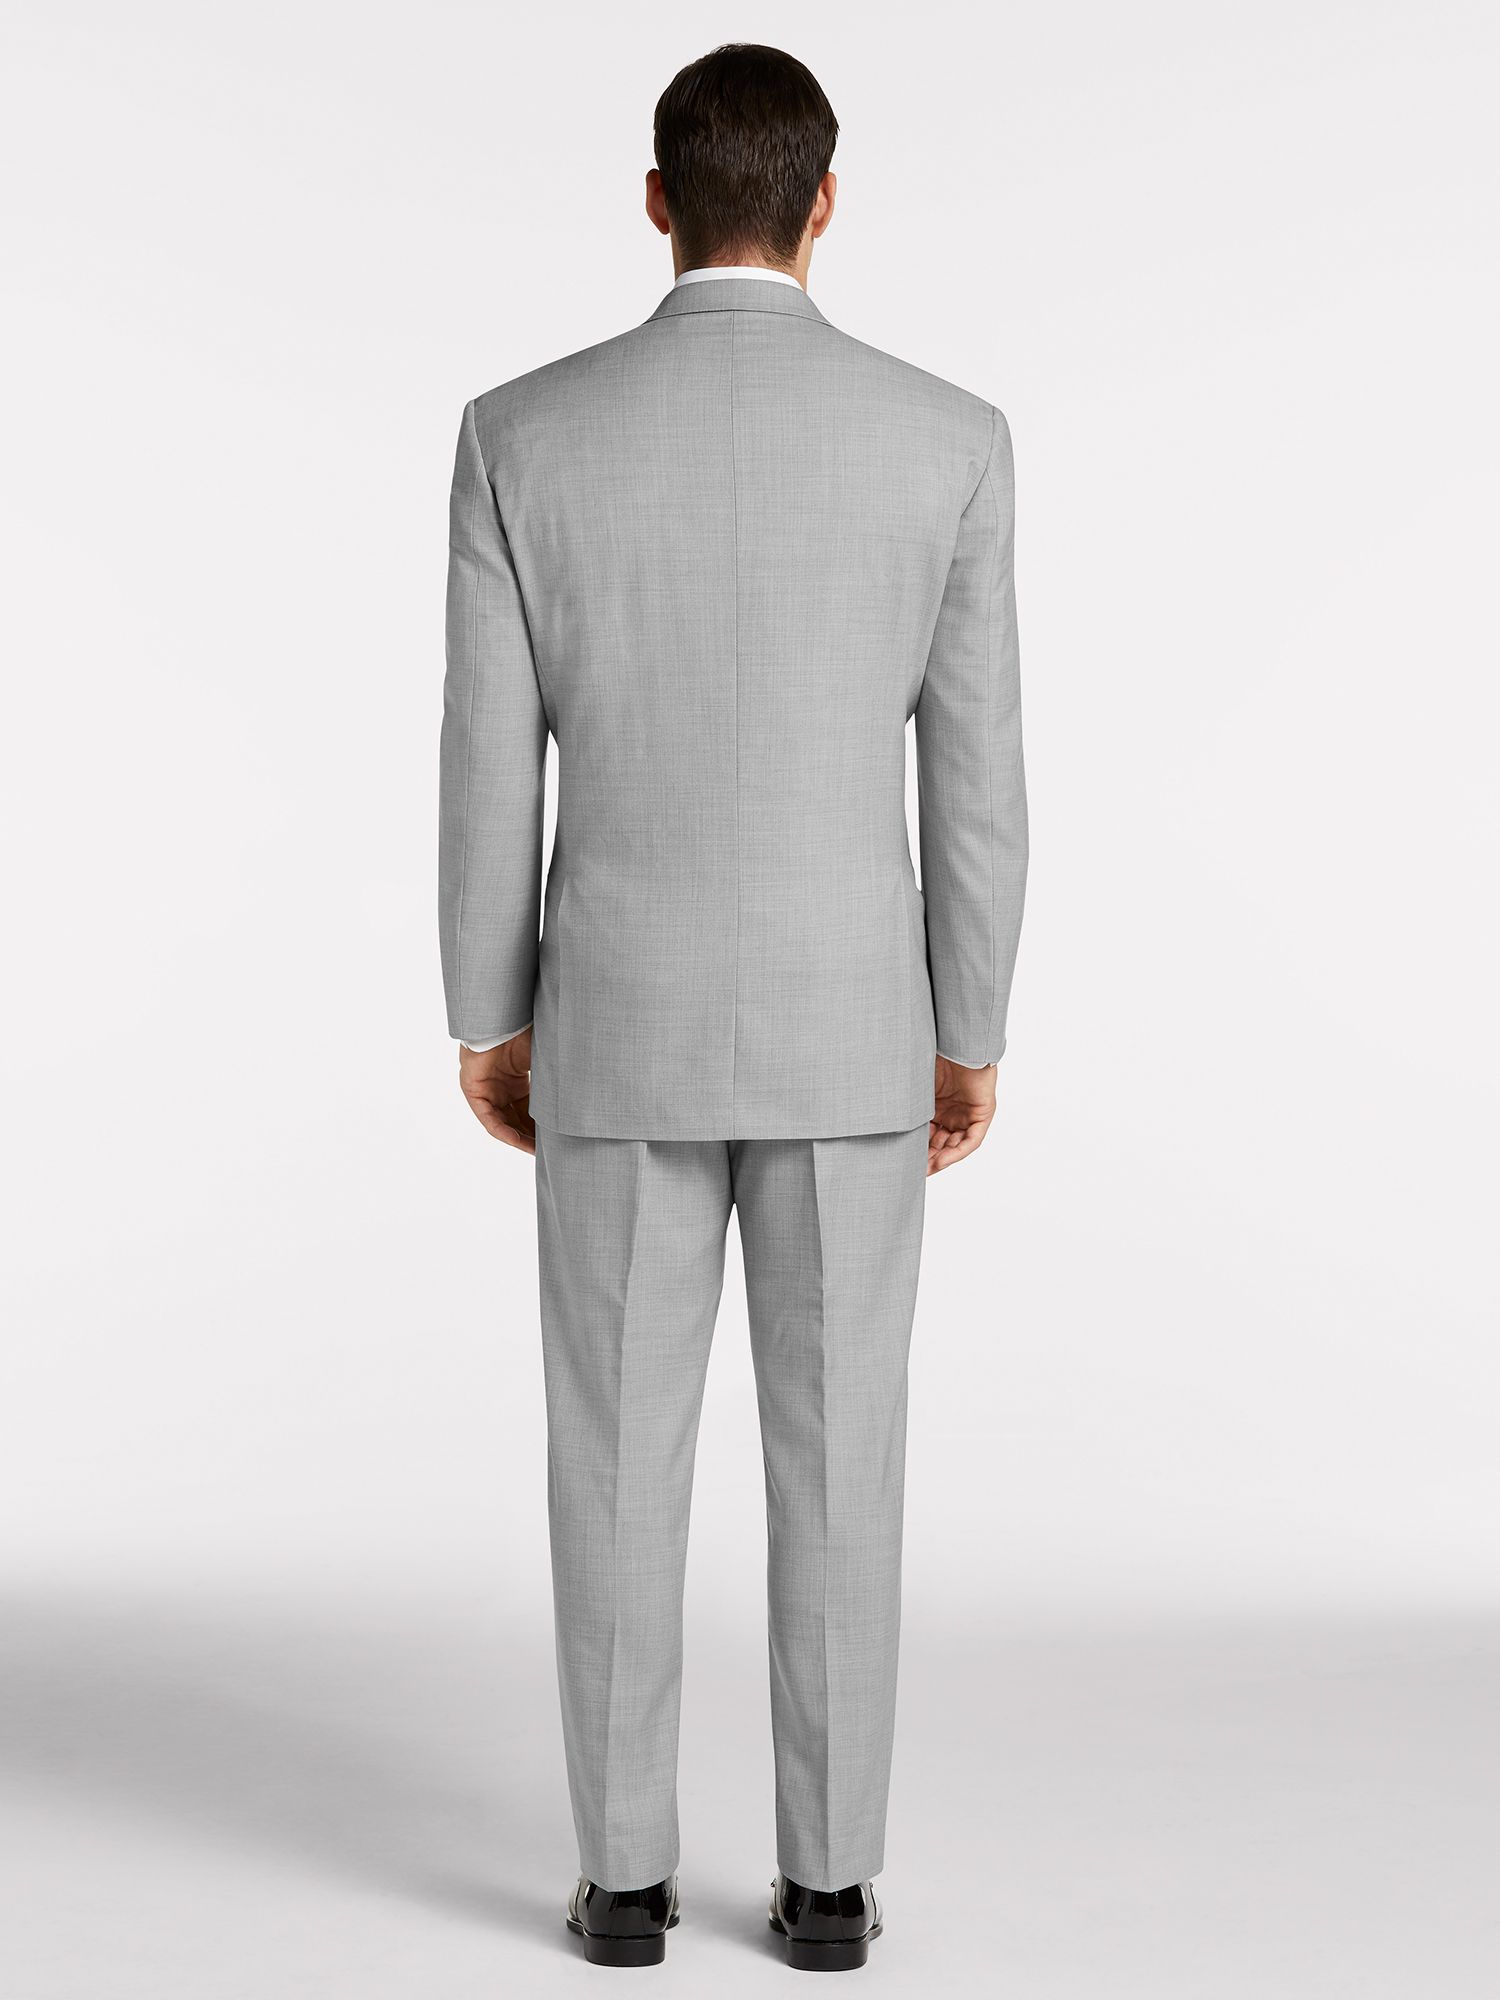 Light Grey Tuxedo by Joseph Abboud | Tuxedo Rental | Moores Clothing